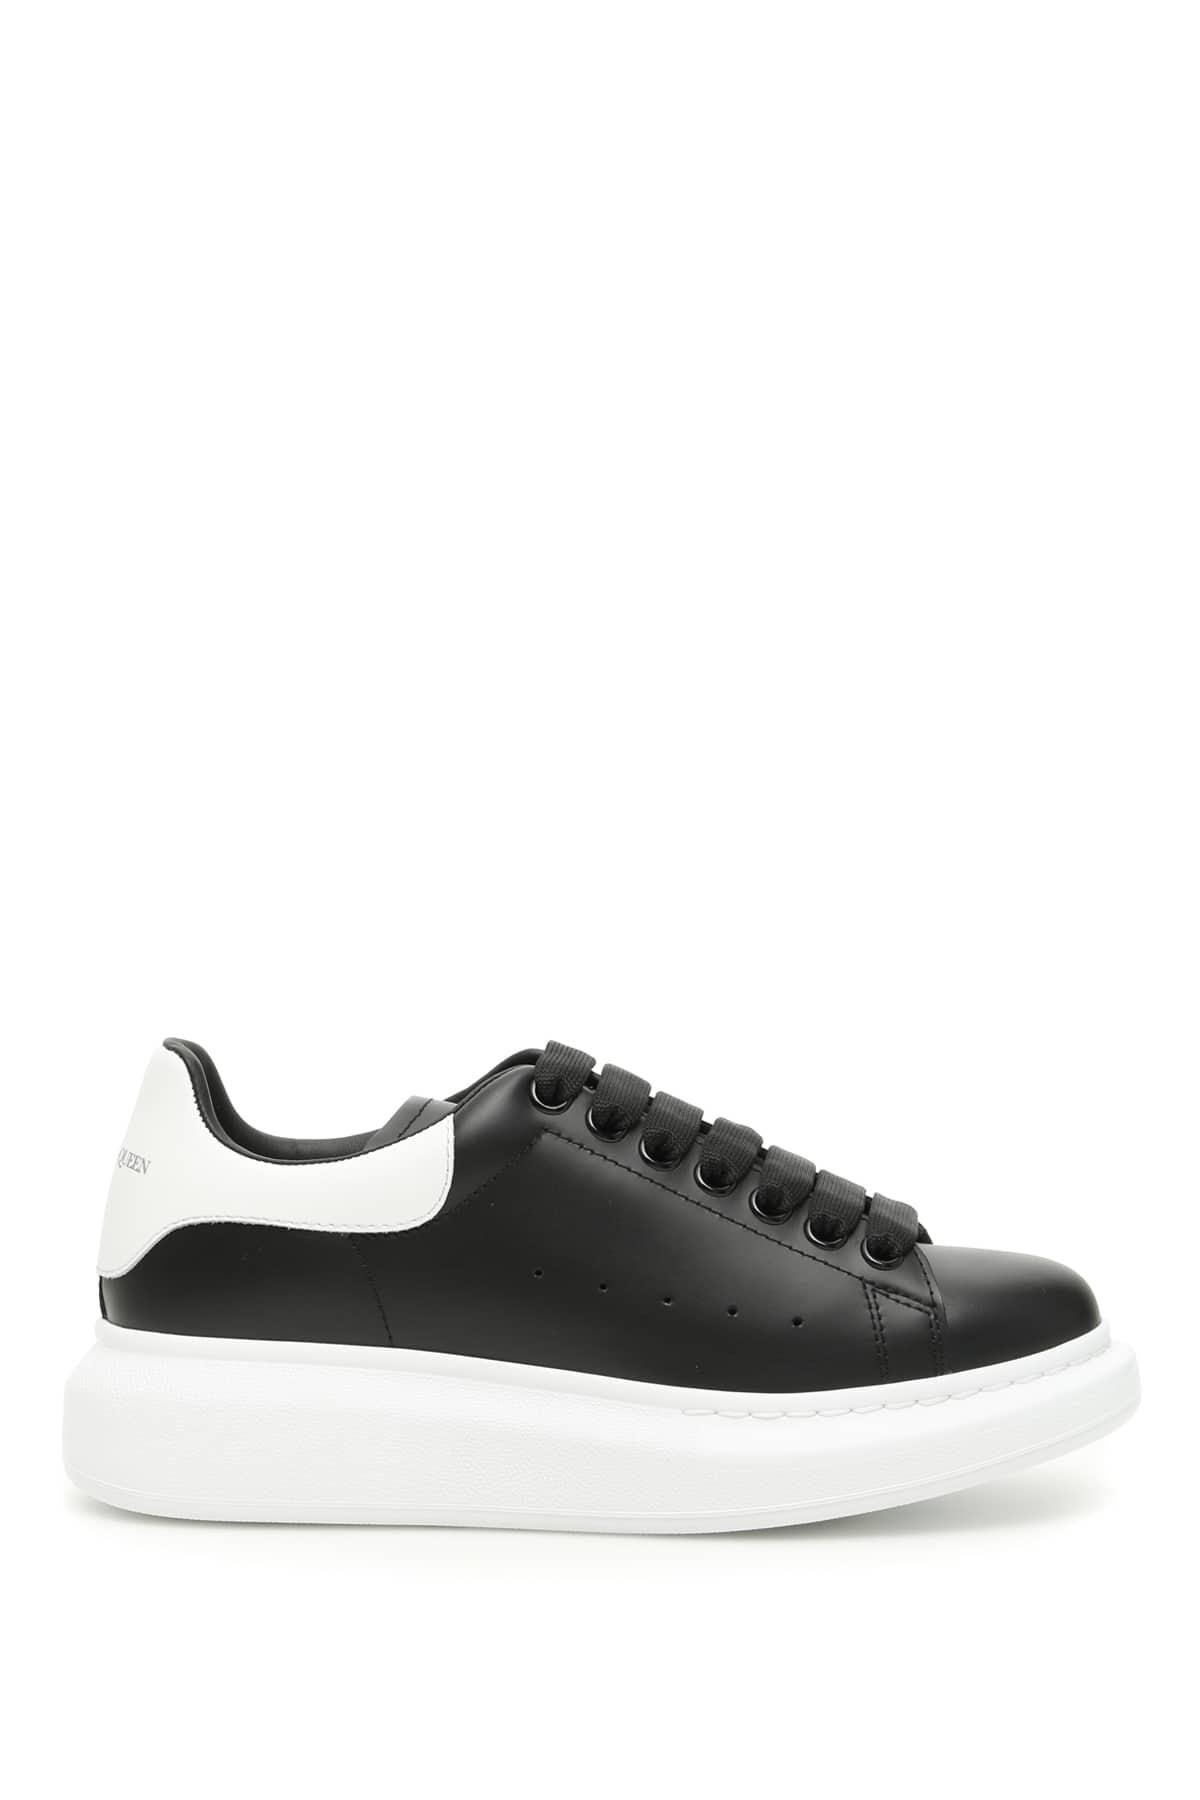 Alexander McQueen Leather Oversize Sneakers in Black,White (Black) - Lyst